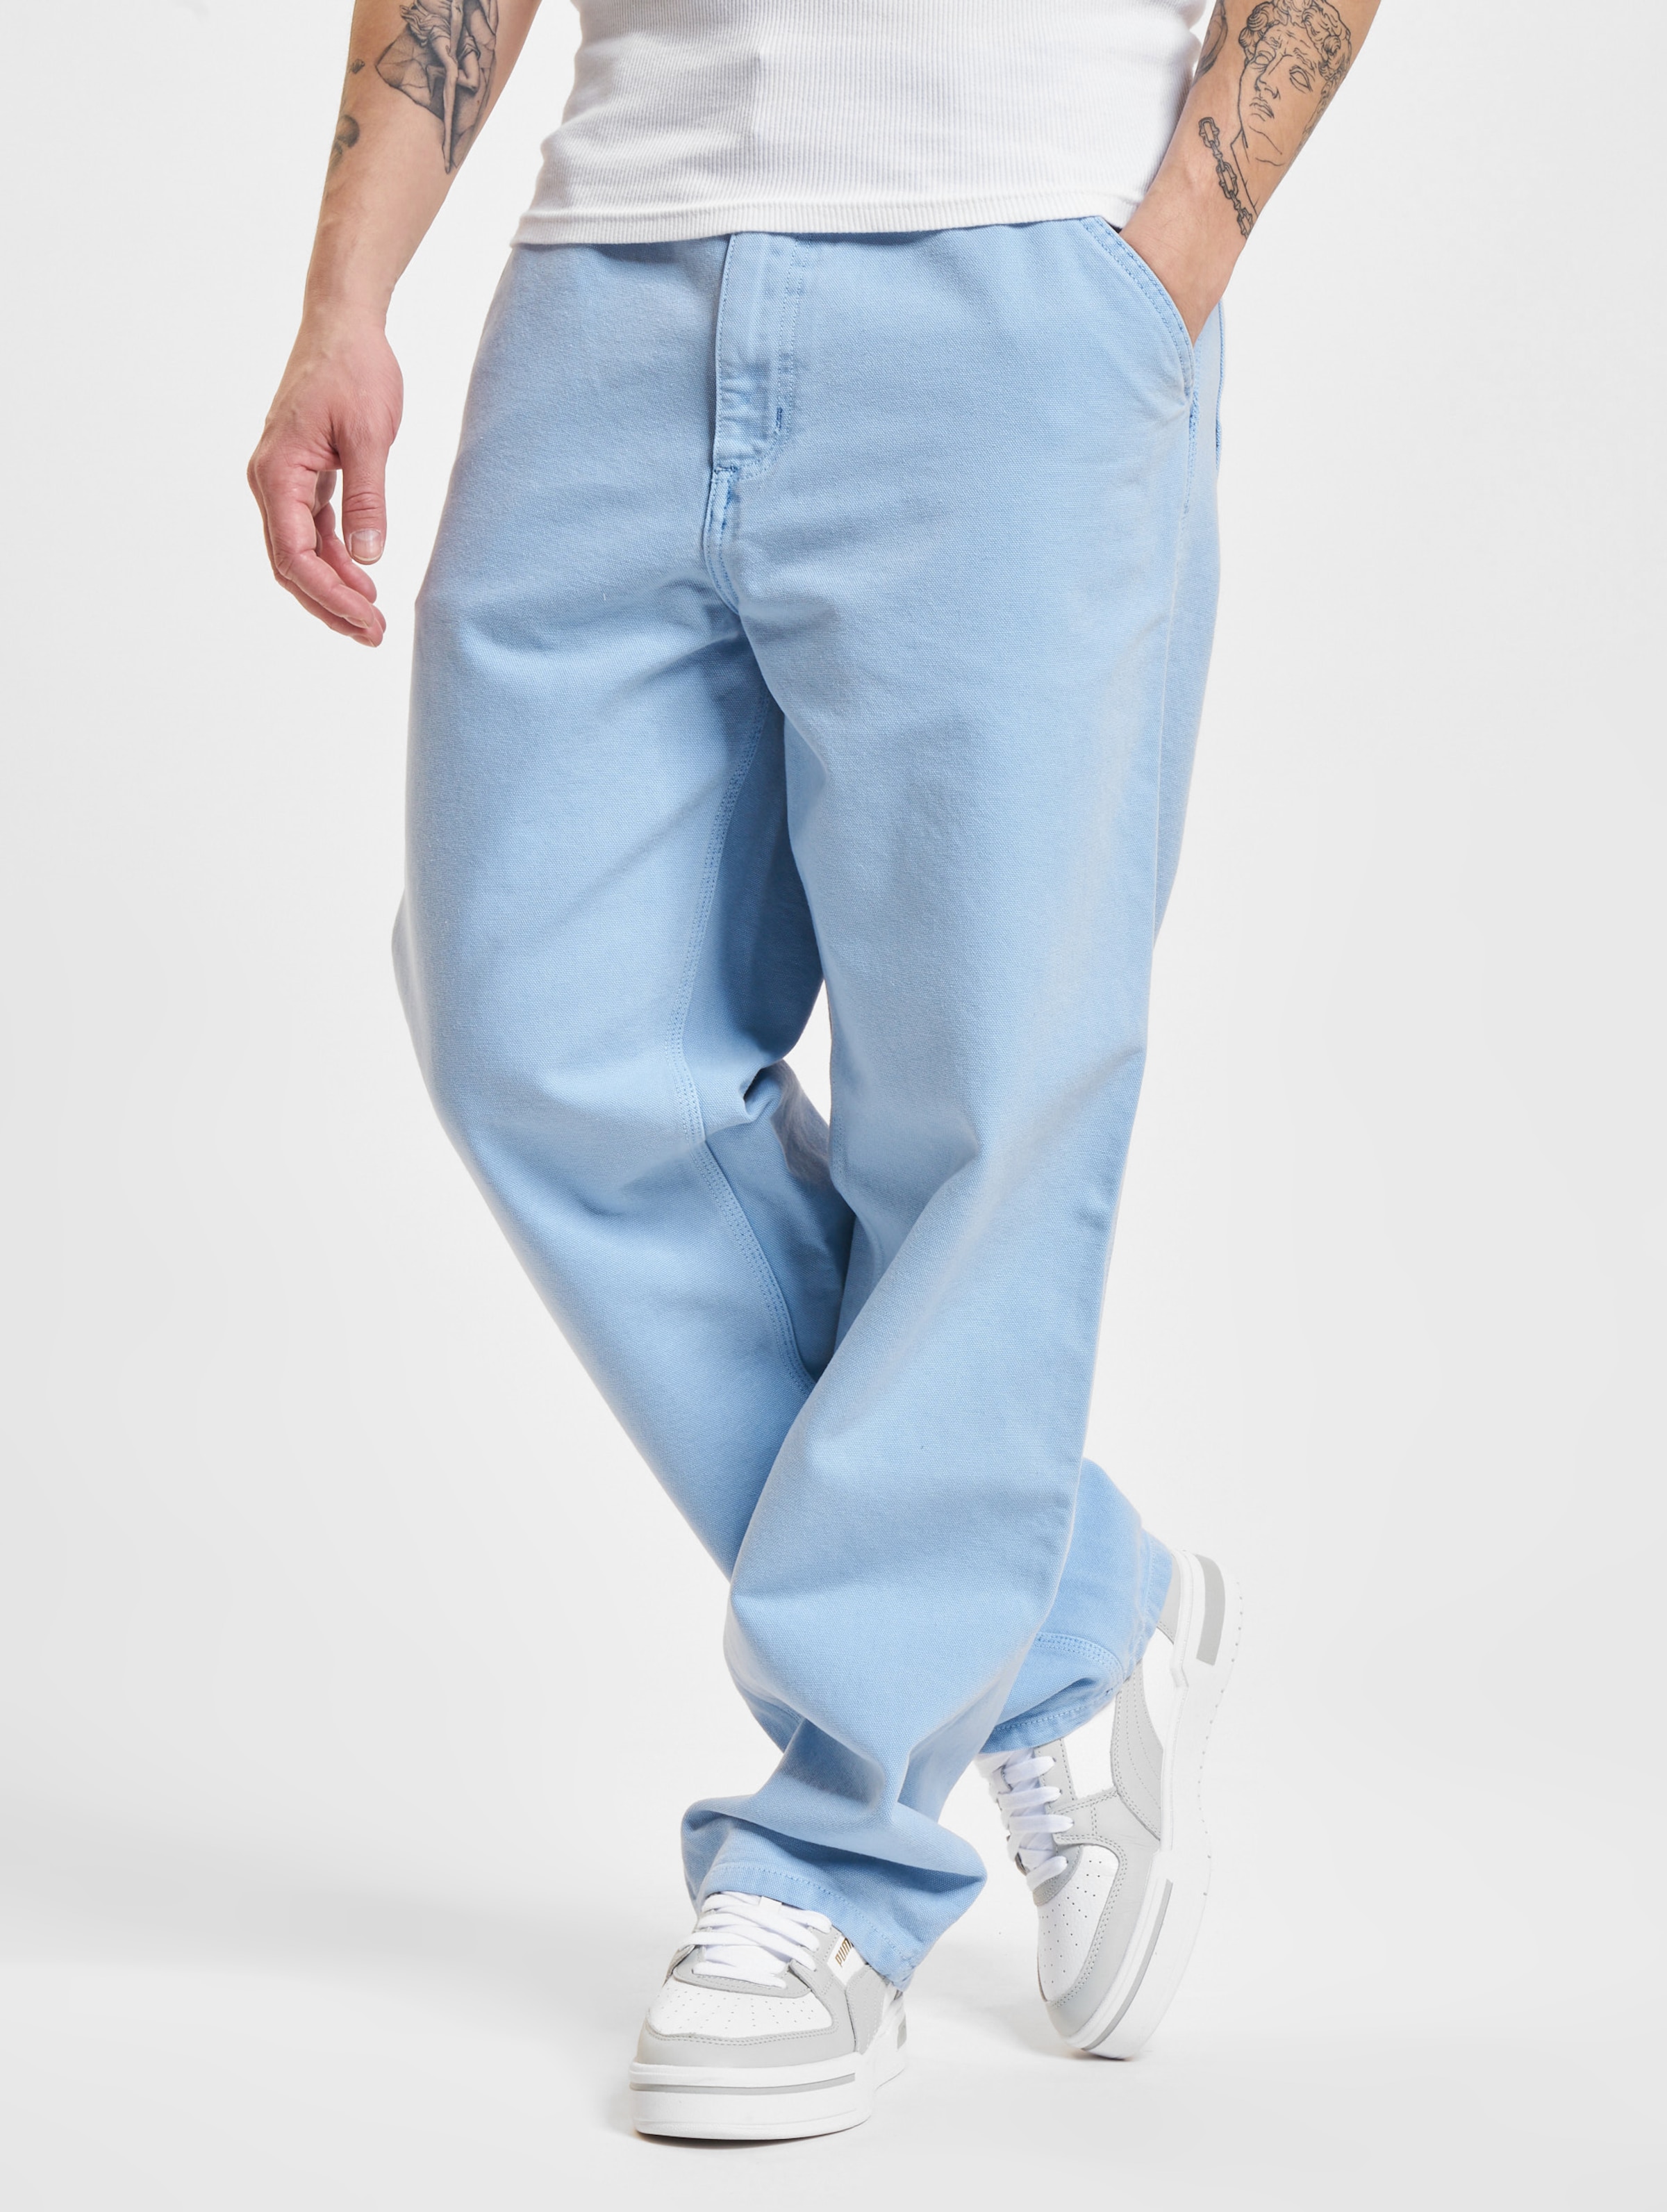 Carhartt WIP Simple Jeans Mannen op kleur blauw, Maat 3132